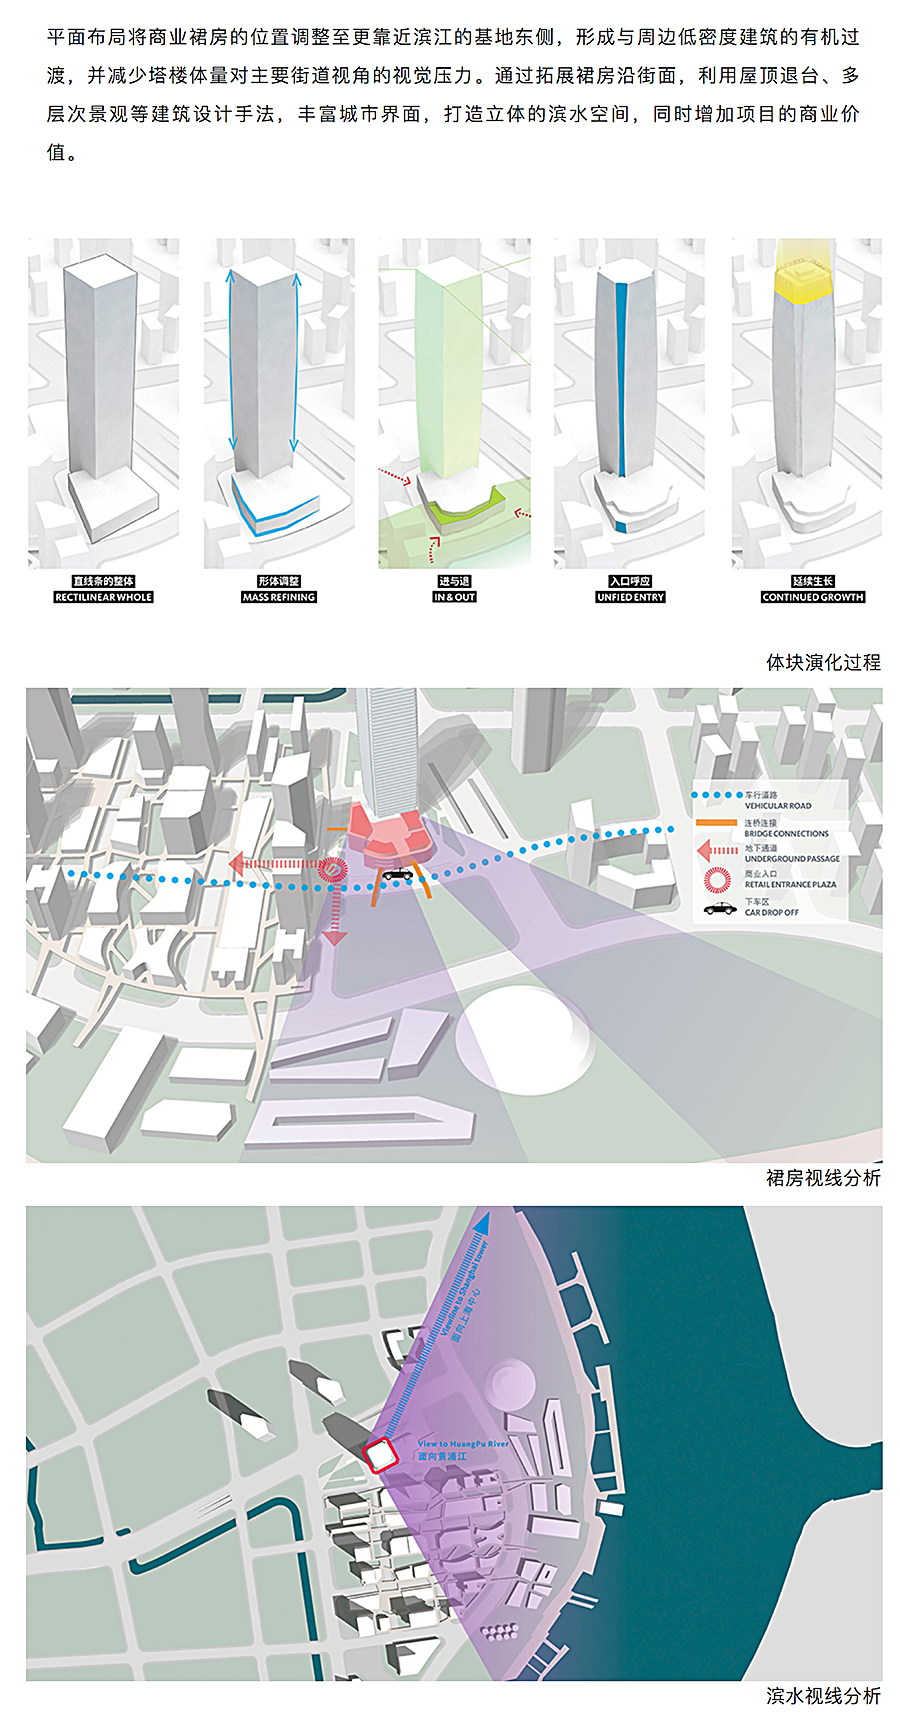 Renewal-Zone：Gensler作品︱星扬西岸中心：塑造城市韧性未来，融合引领品质空间_0004_图层-5.jpg